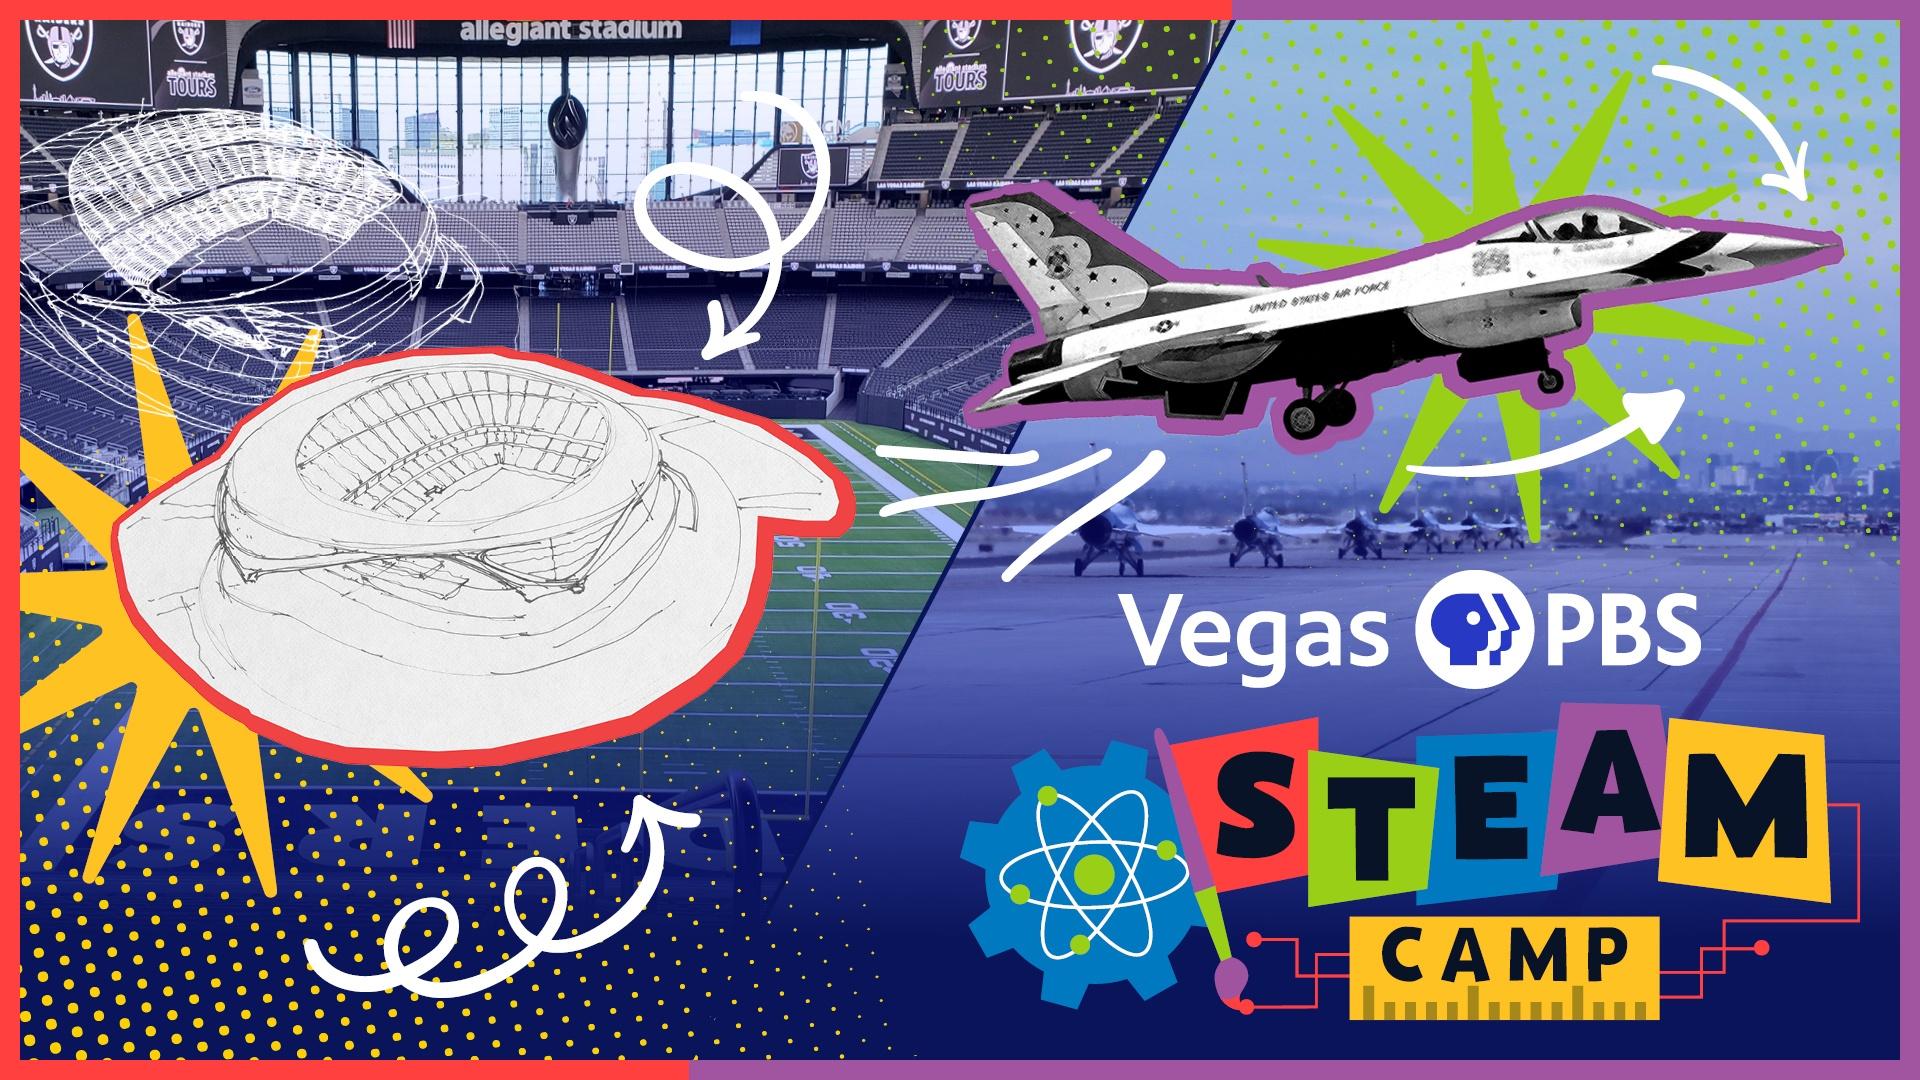 hunderbird Jets and Allegiant Stadium | Vegas PBS STEAM Camp S2 Ep1